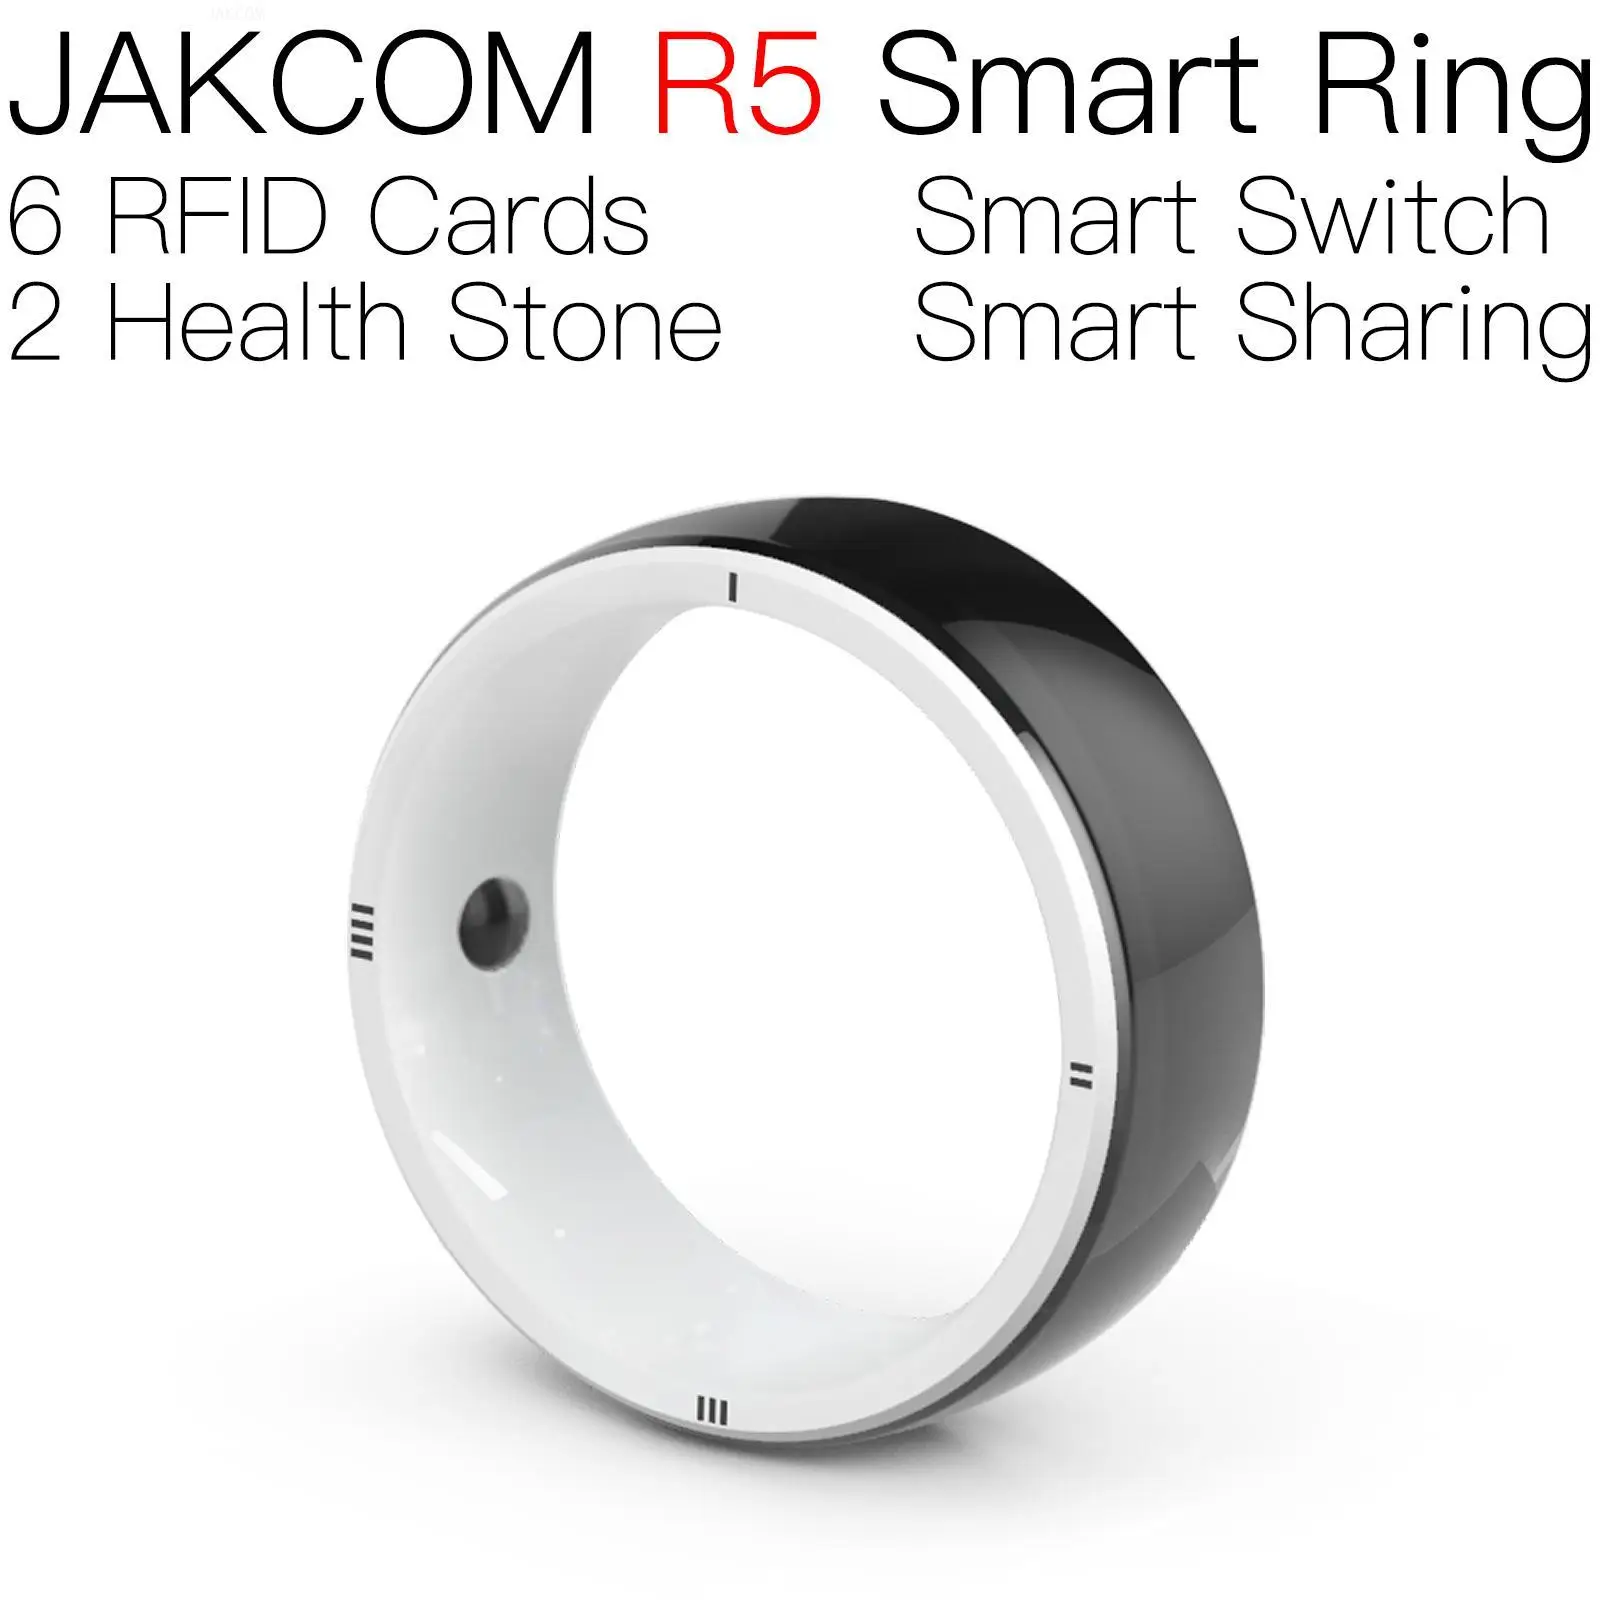 

JAKCOM R5 Smart Ring Match to em marine rfid nfc clear stickers 12x19mm 13 56 uid mx 6201n toner reset chip herd drive